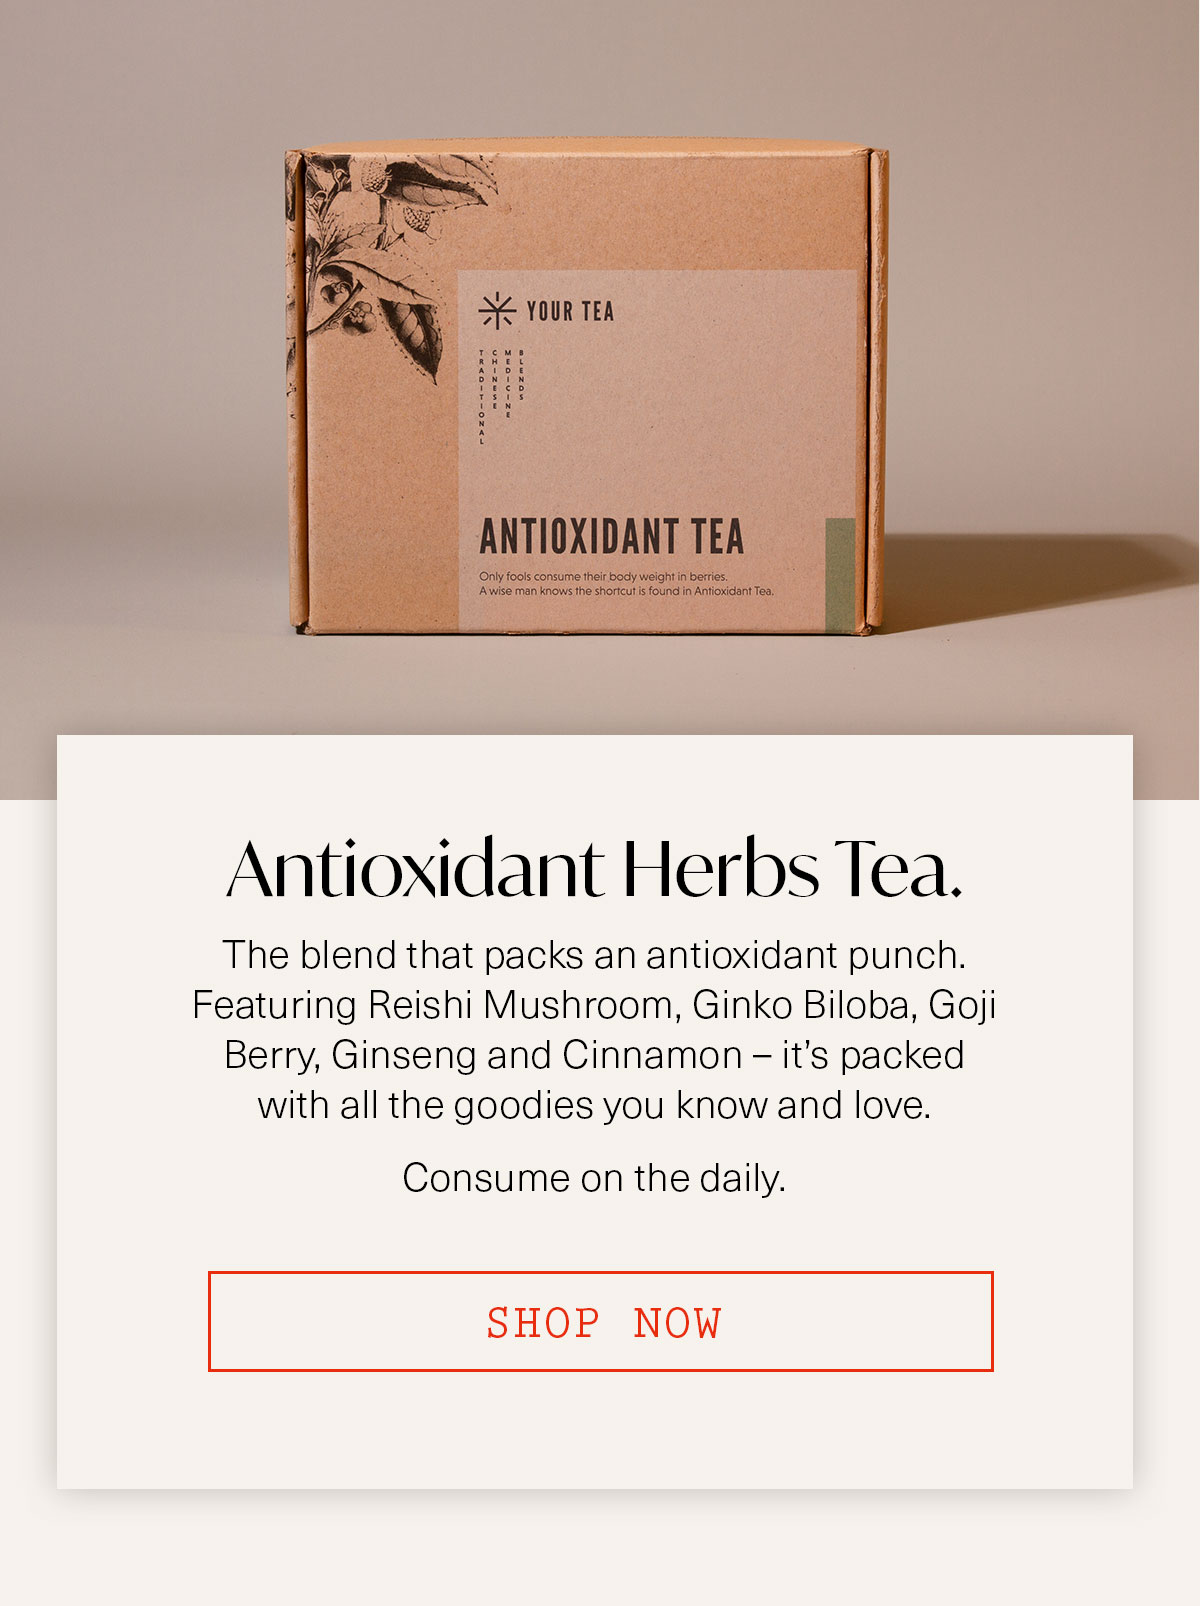 ANTIOXIDANT HERBS TEA